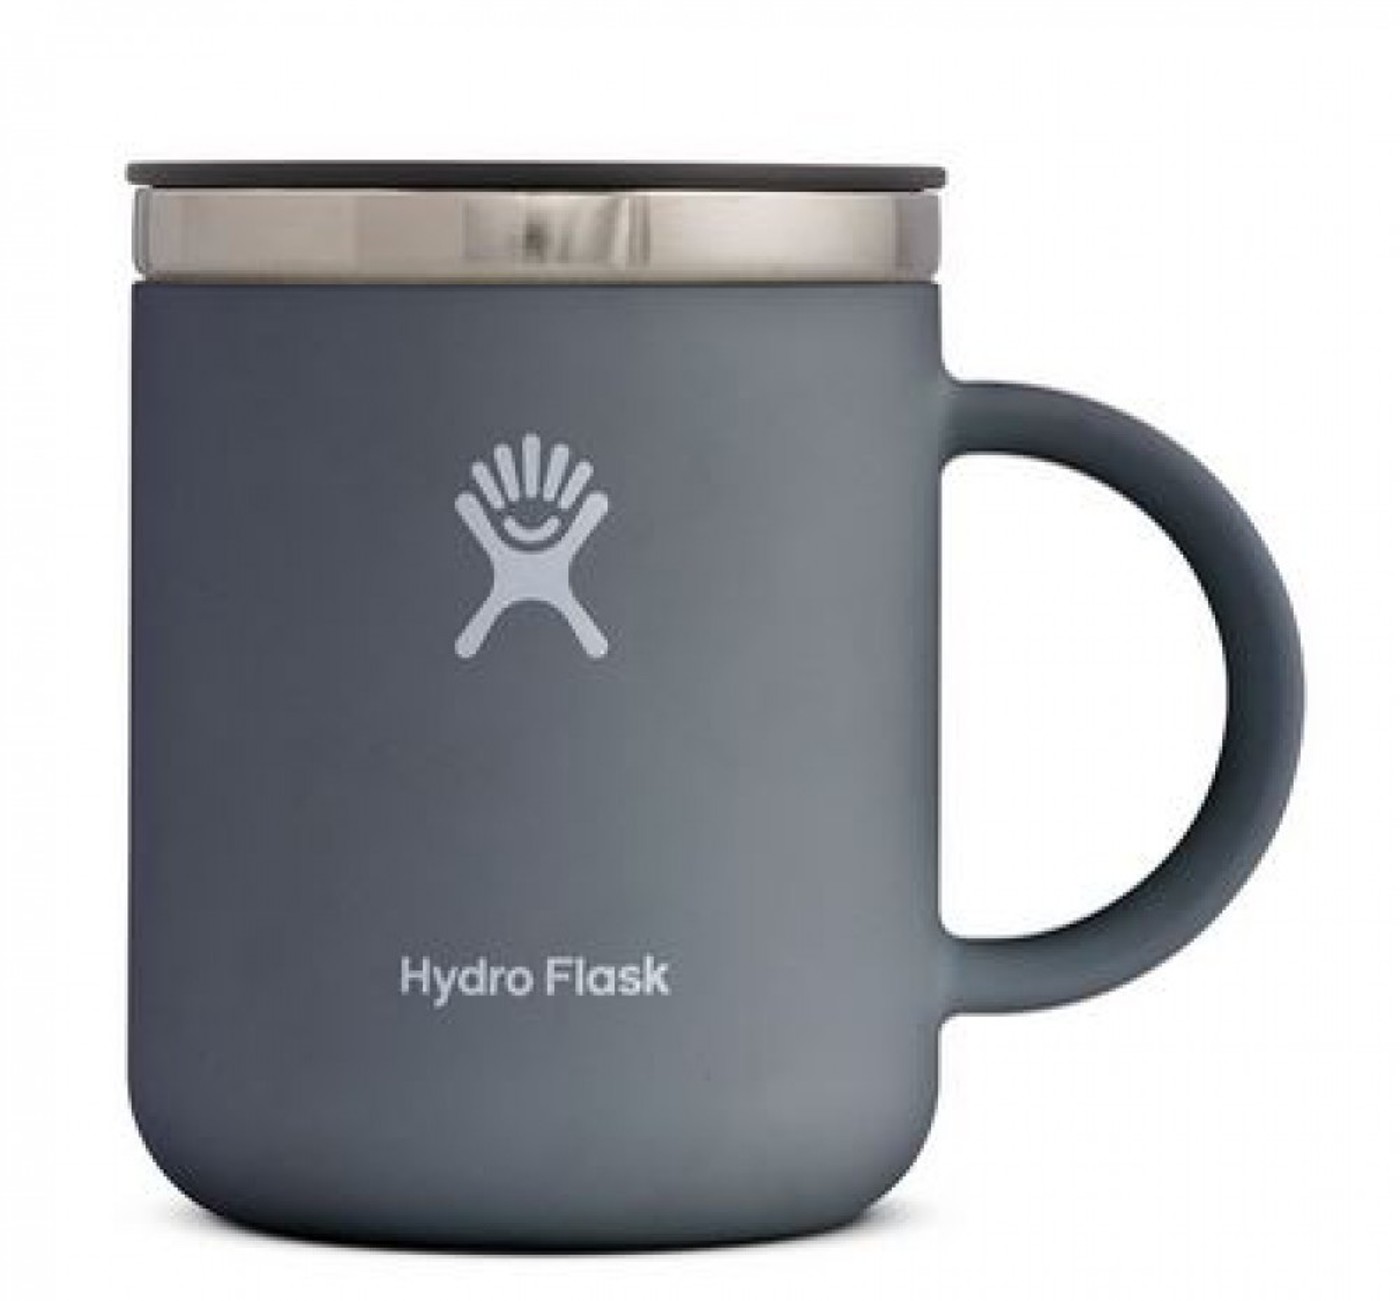 HYDRO FLASK COFFEE MUG 12 OZ